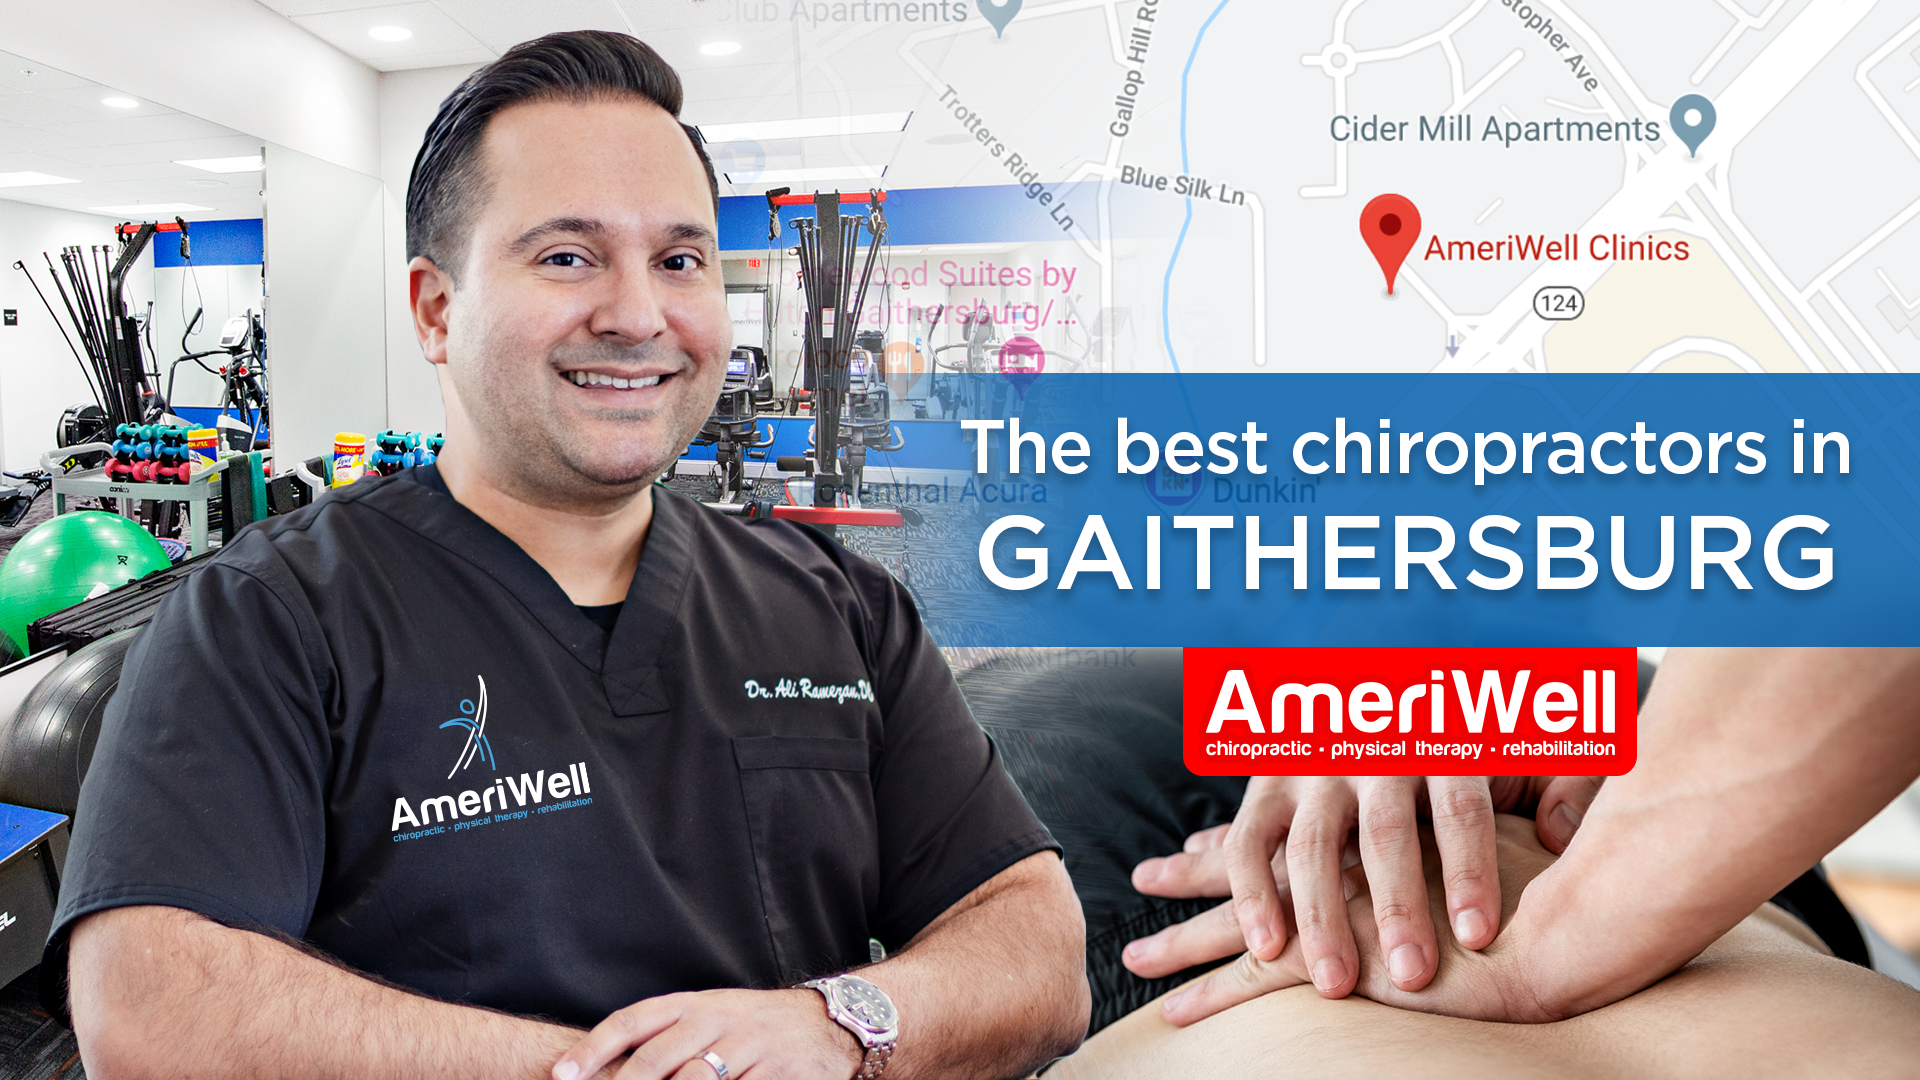 Gaithersburg - Ameriwell Clinics the best chiropractors